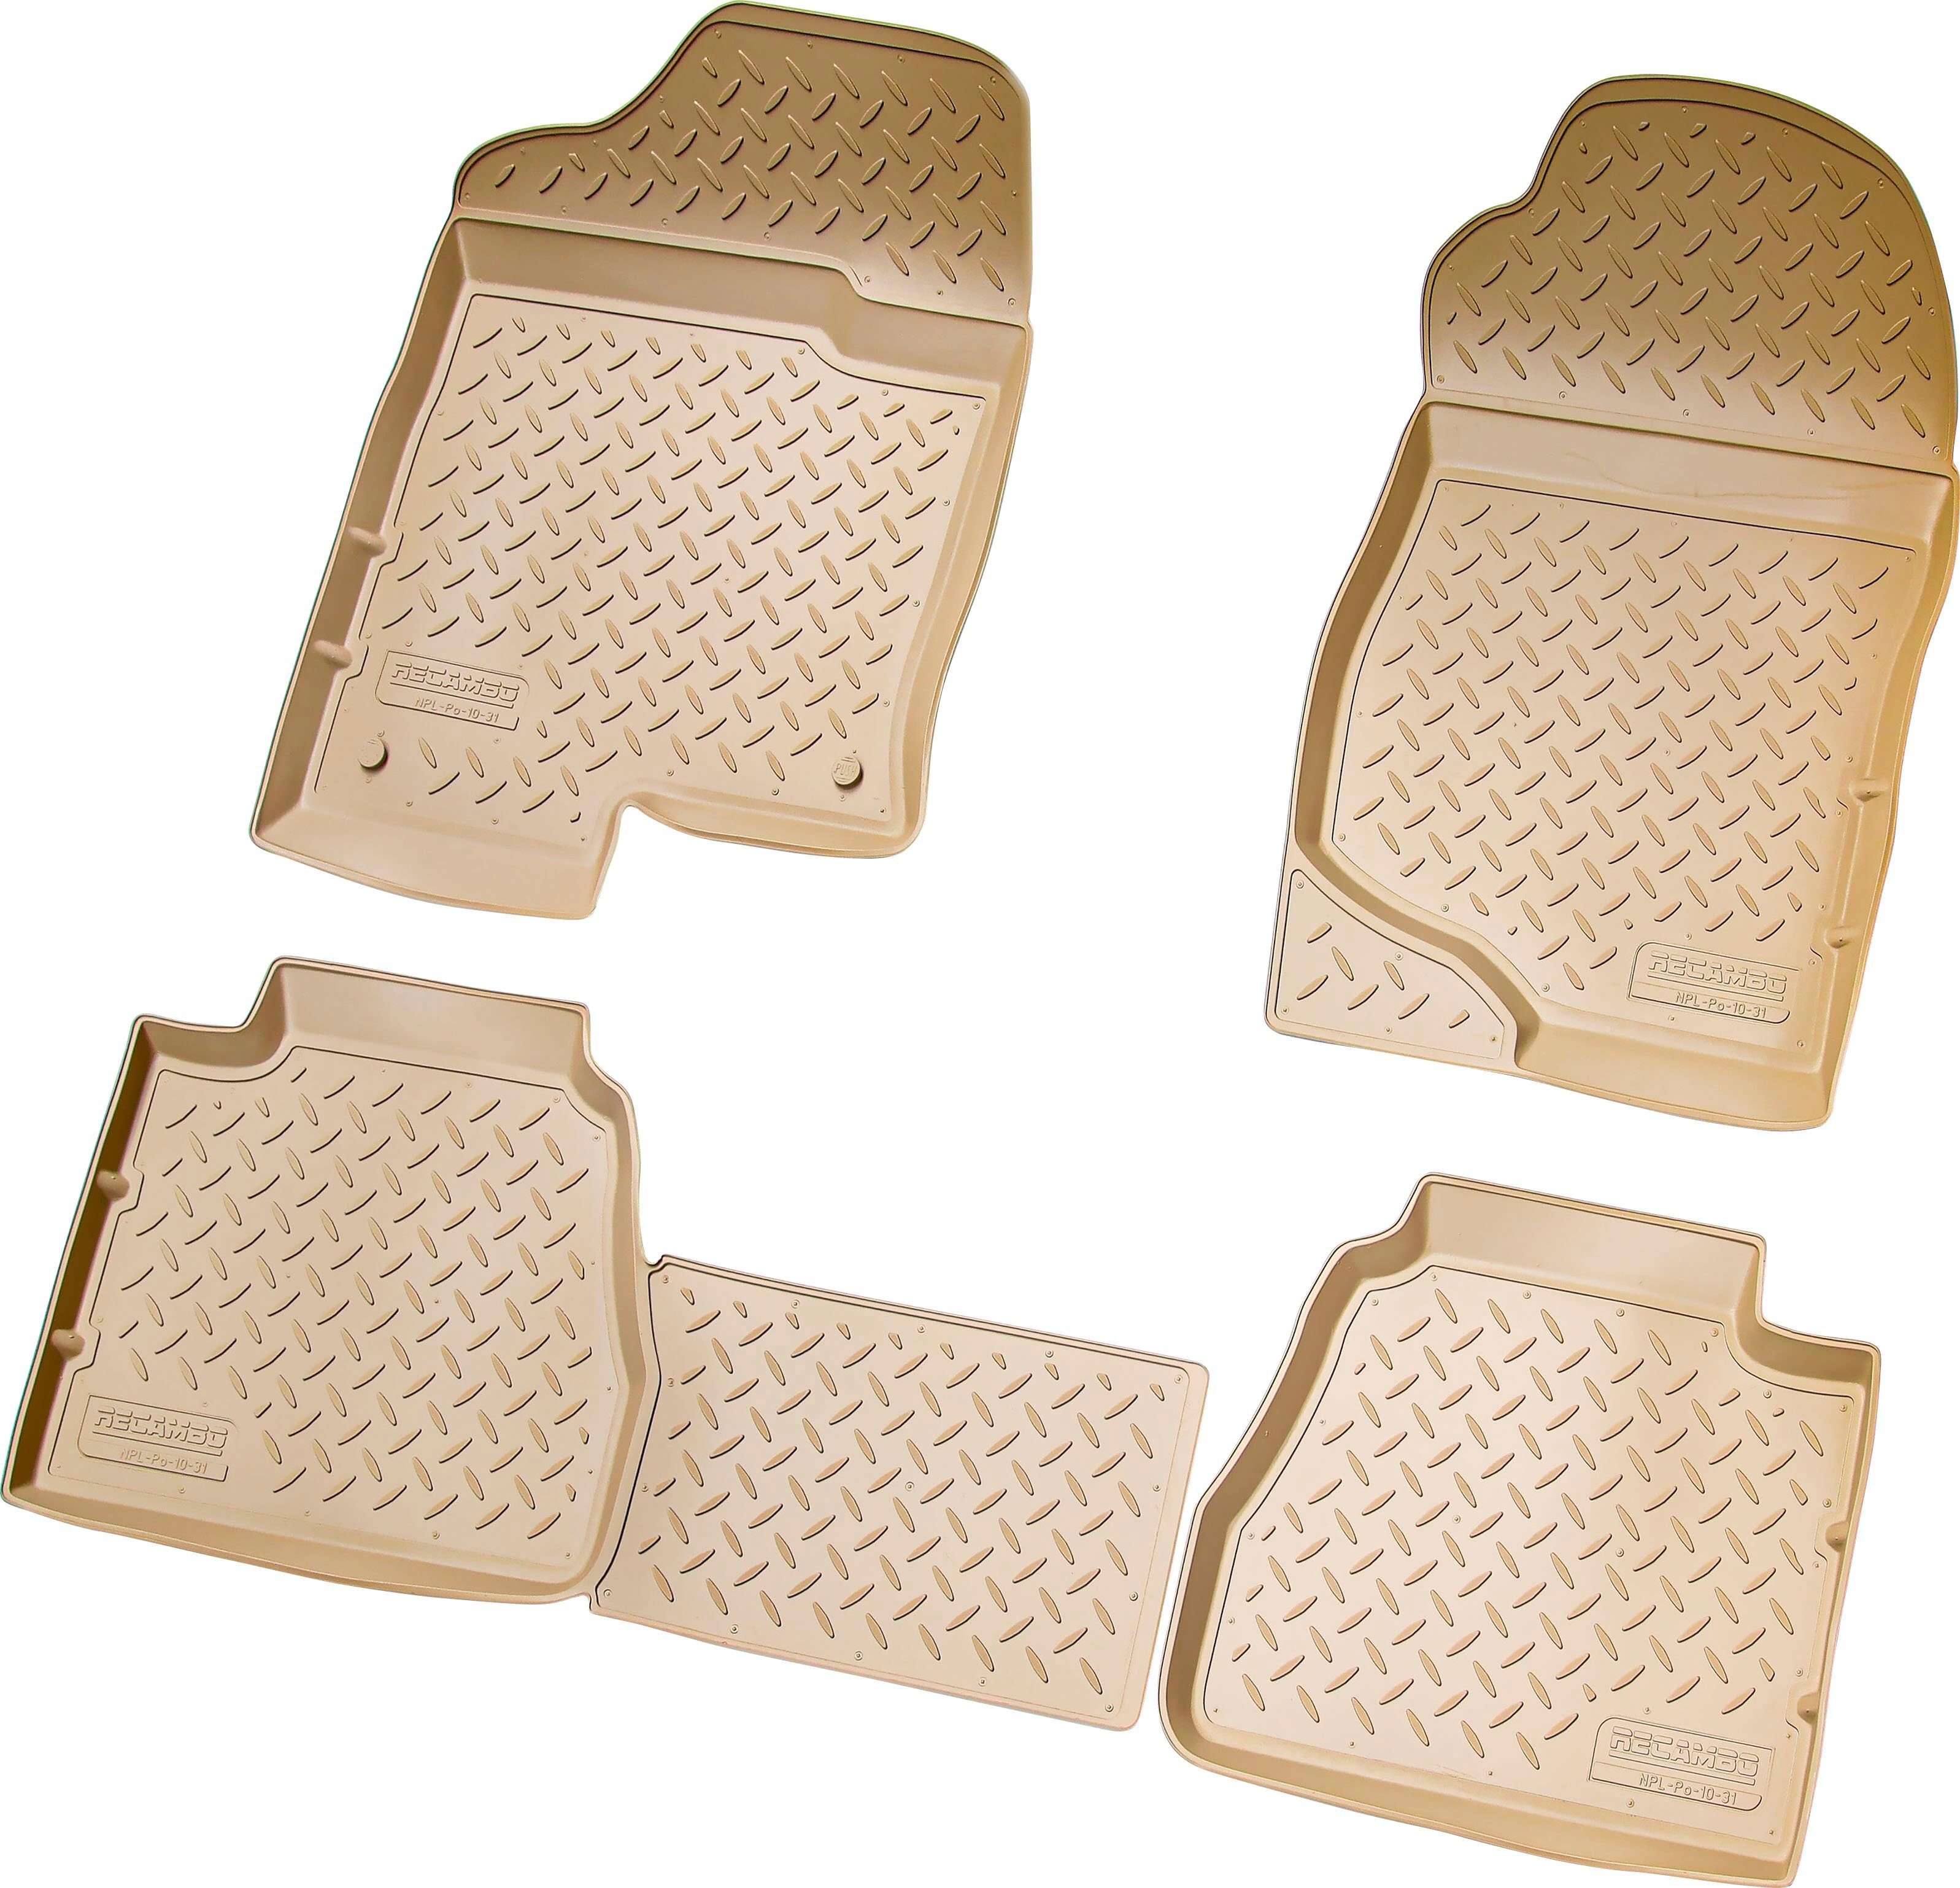 RECAMBO Passform-Fußmatten CustomComforts 2014, (4 für - 2007 Suburban, perfekte St), CHEVROLET Passform